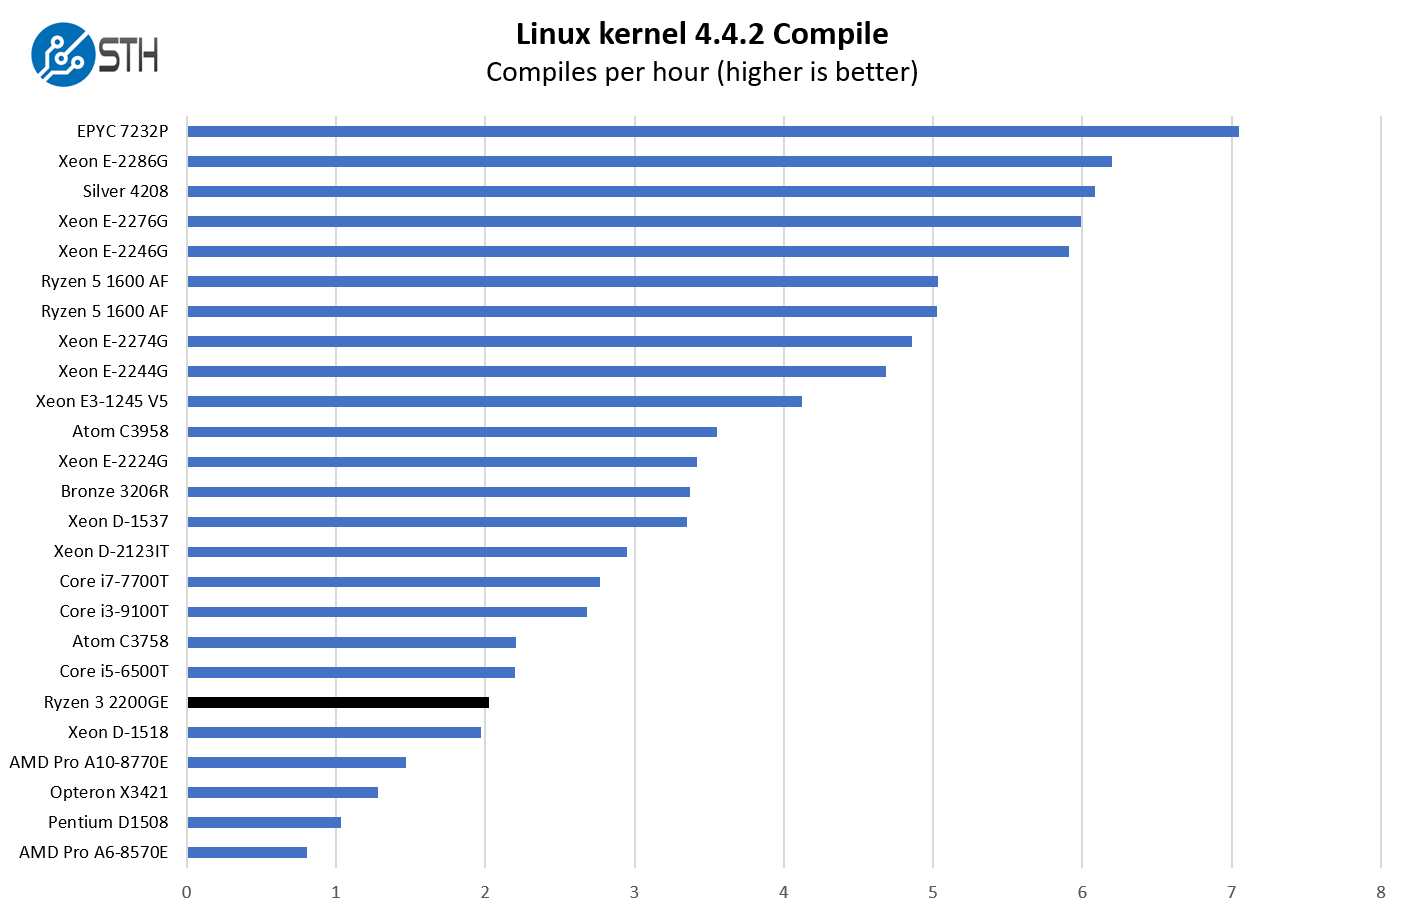 AMD Ryzen Pro 3 2200GE Linux Kernel Compile Benchmark